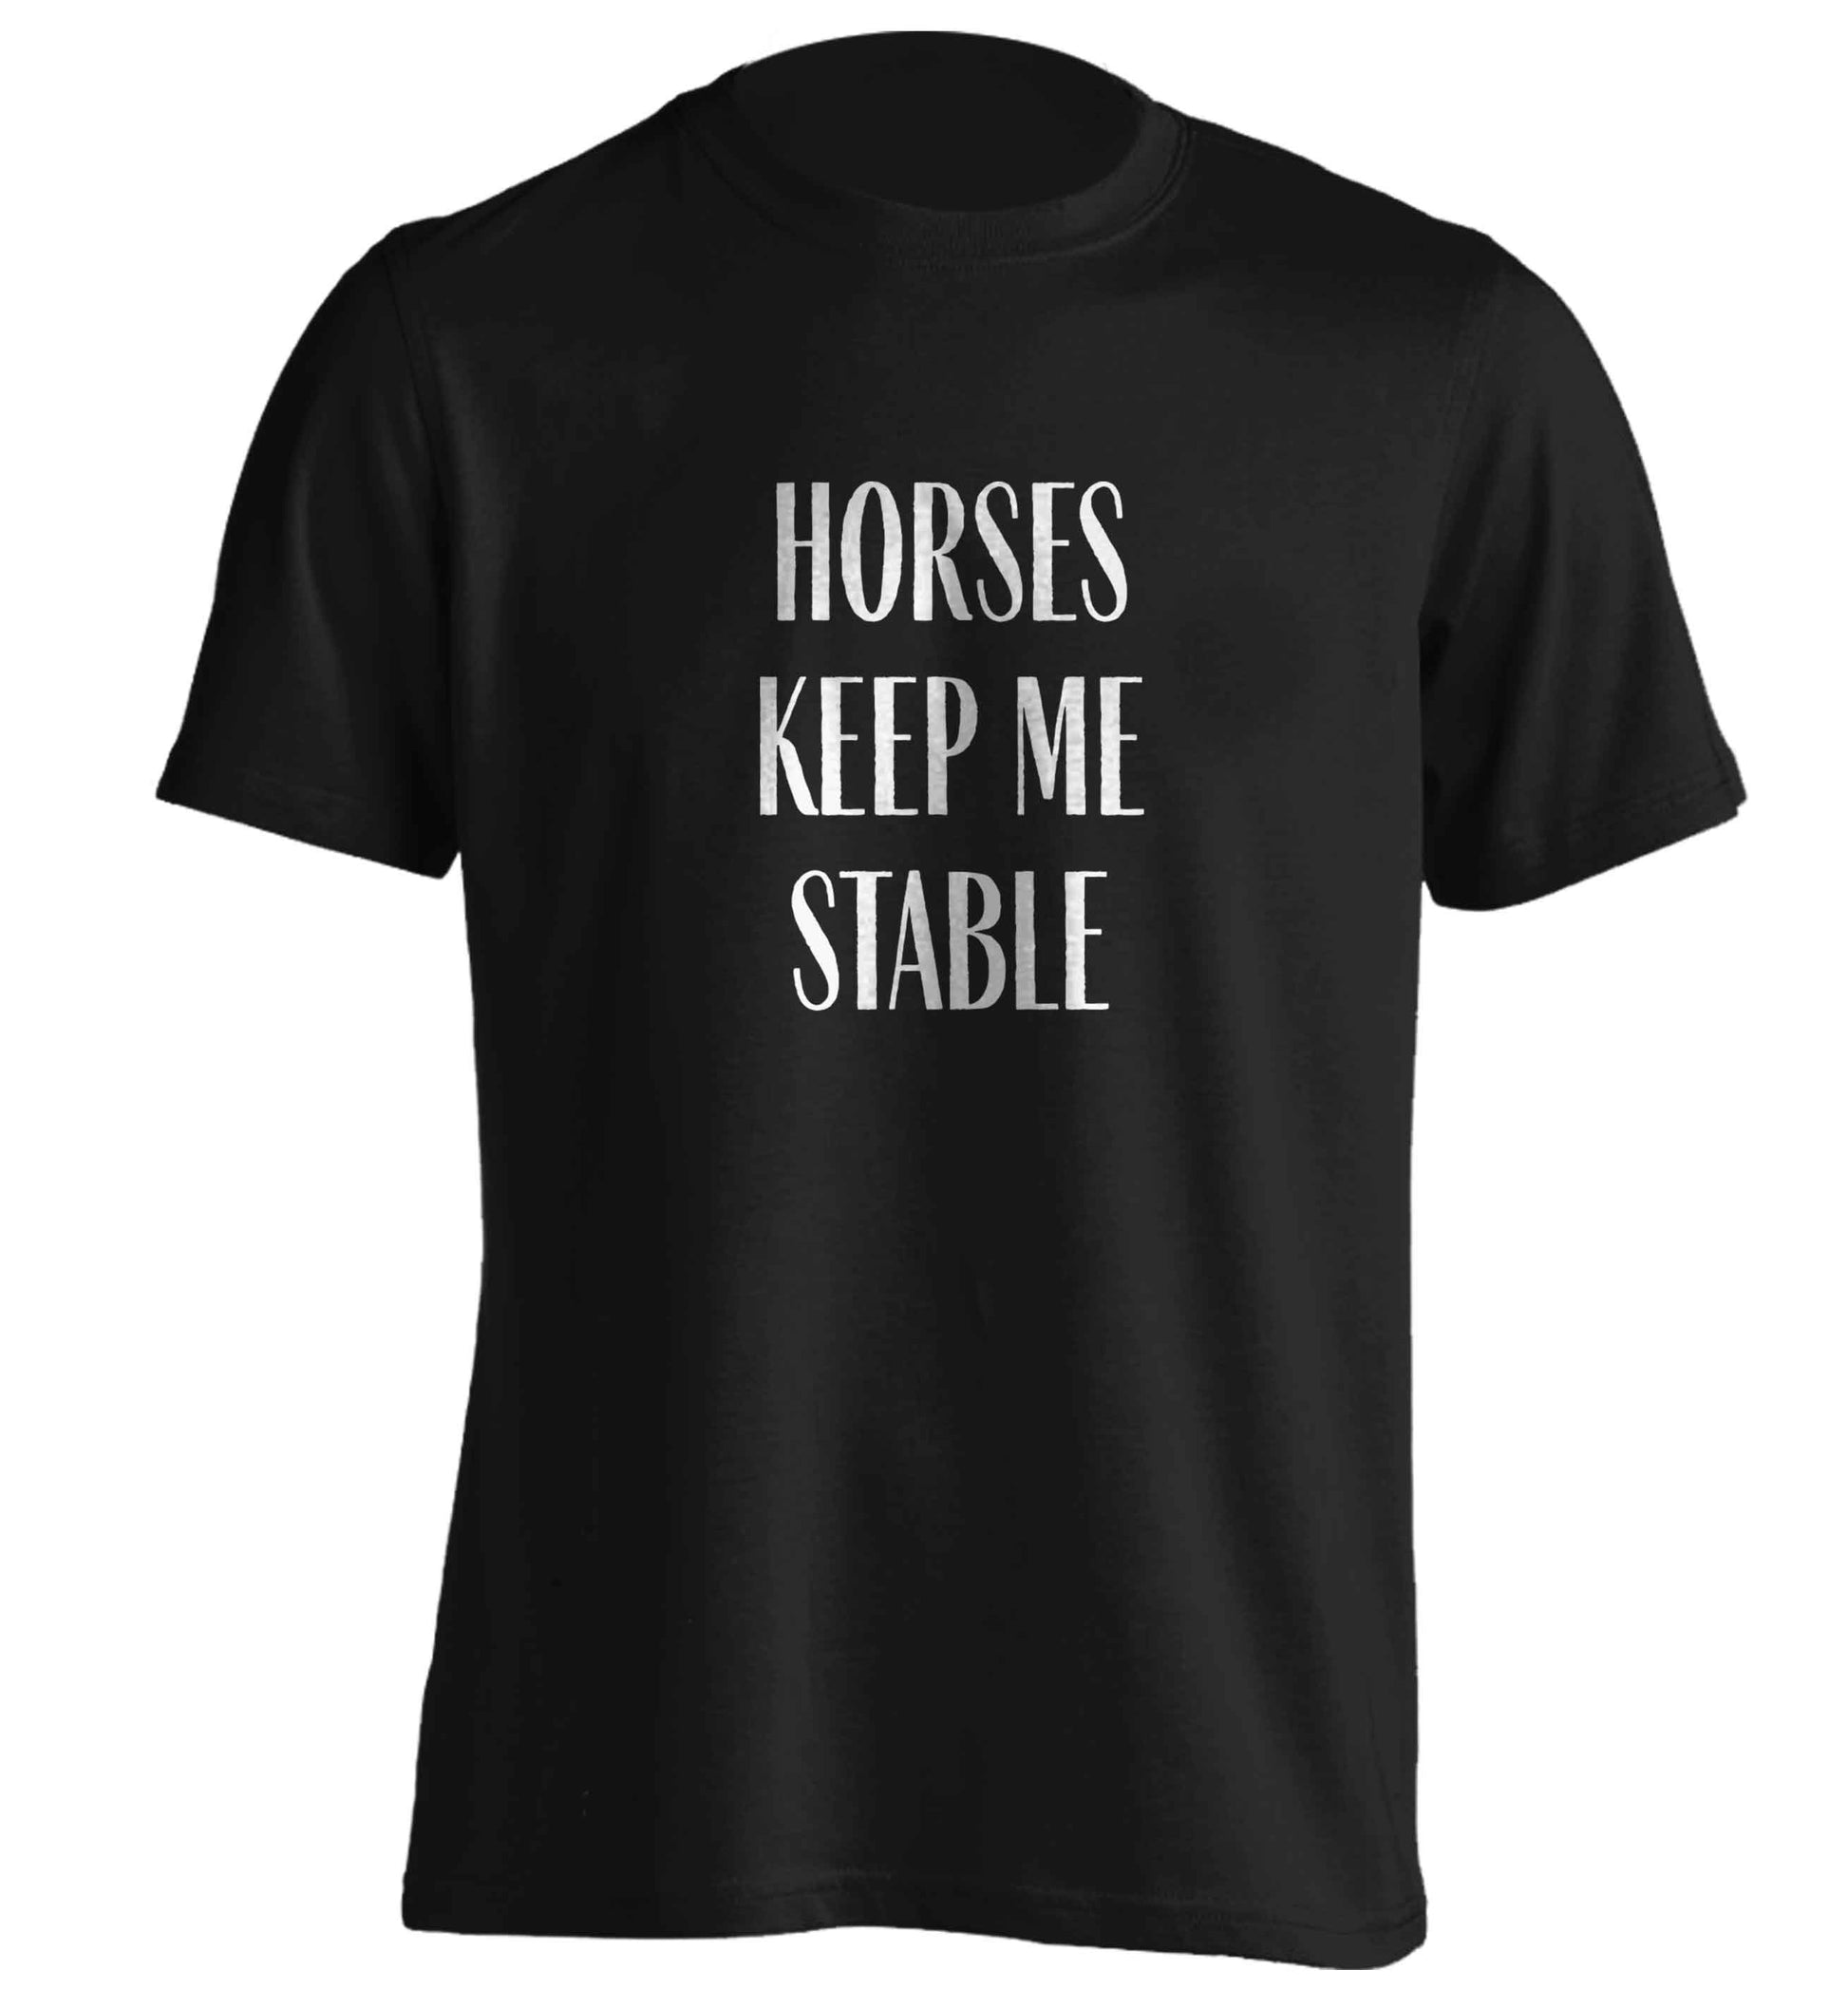 Horses keep me stable adults unisex black Tshirt 2XL